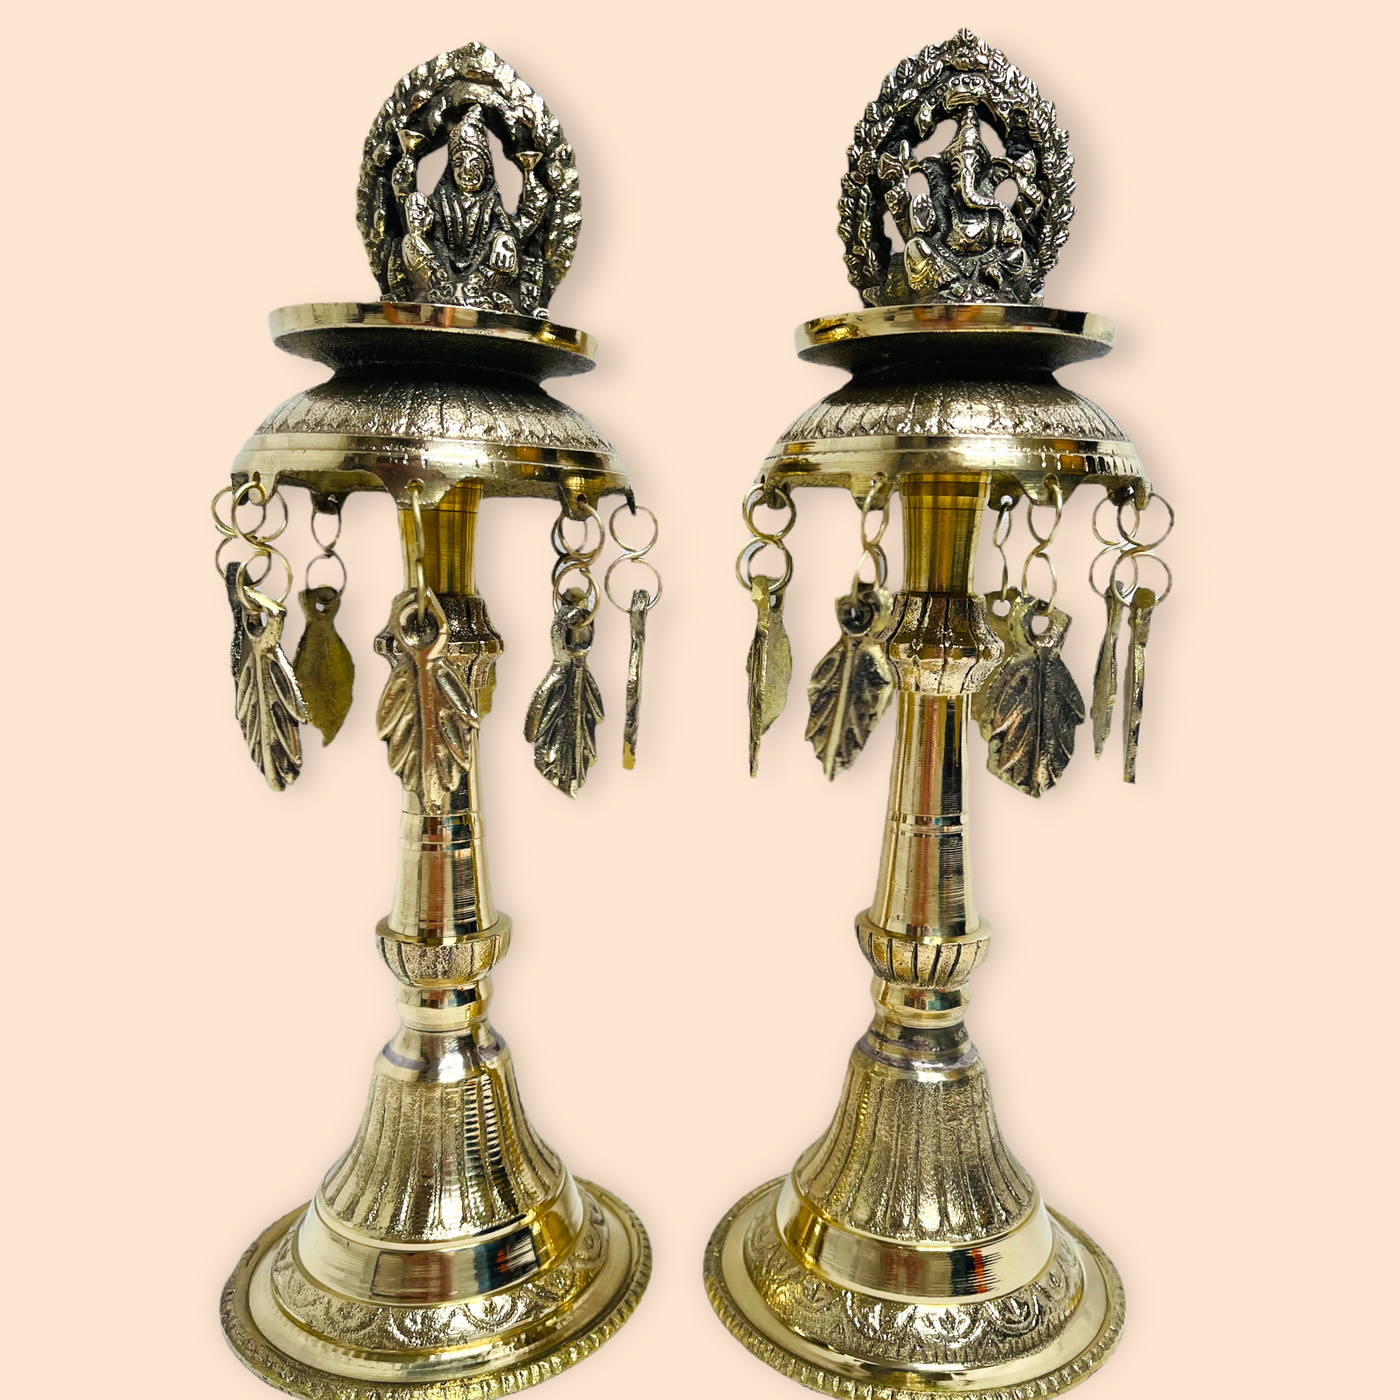 Panas Brass set (Laxmi and Ganesh)